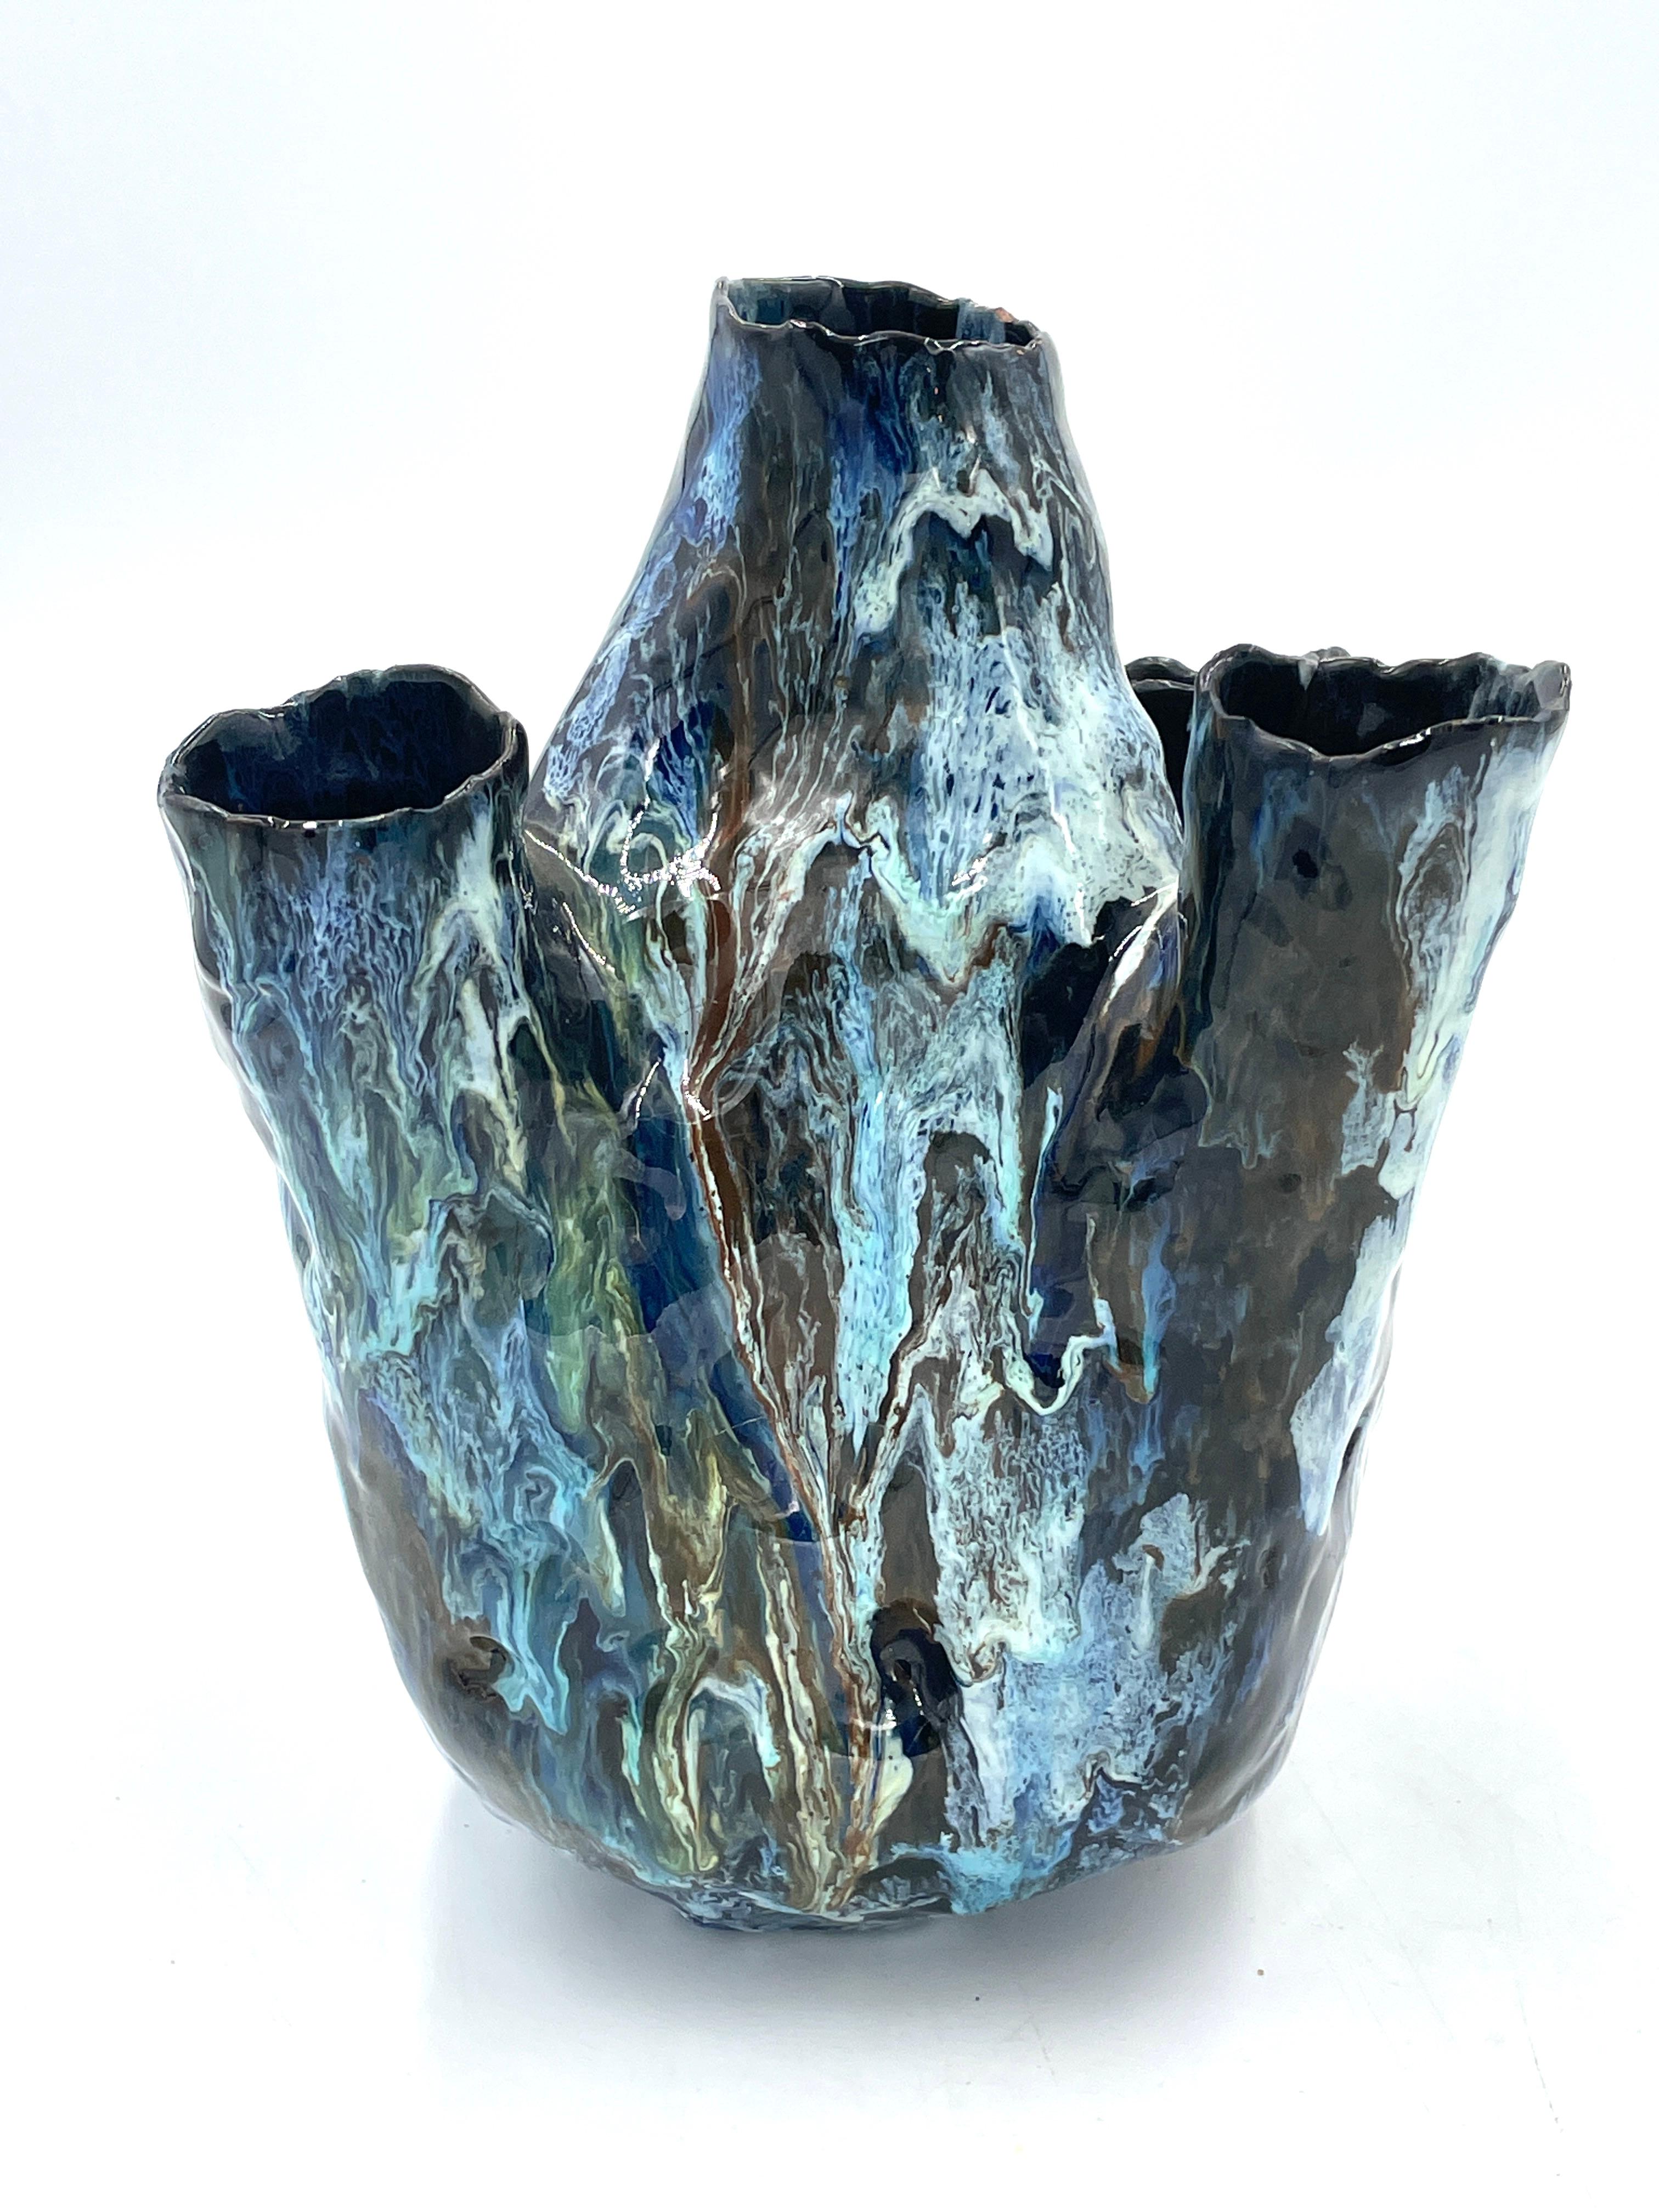 Organic Modern Glazed Ceramic Vase/Polish, Toni Furlan, 1954 For Sale